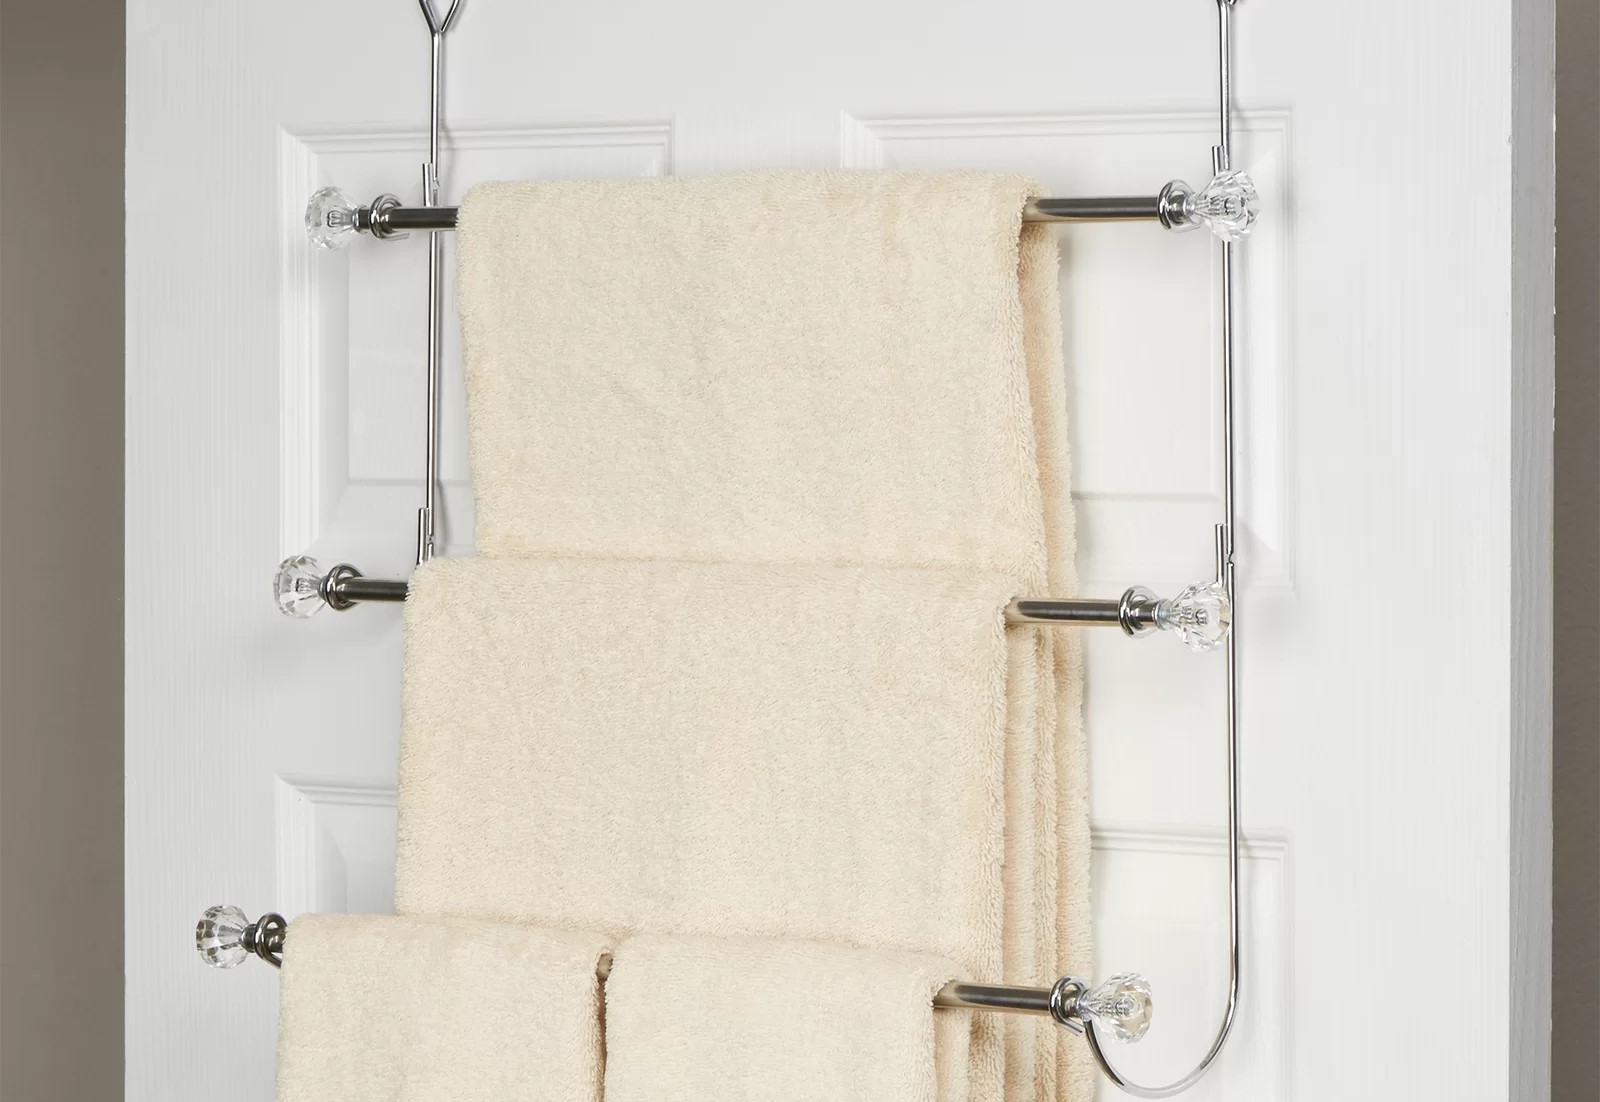 Towel bars